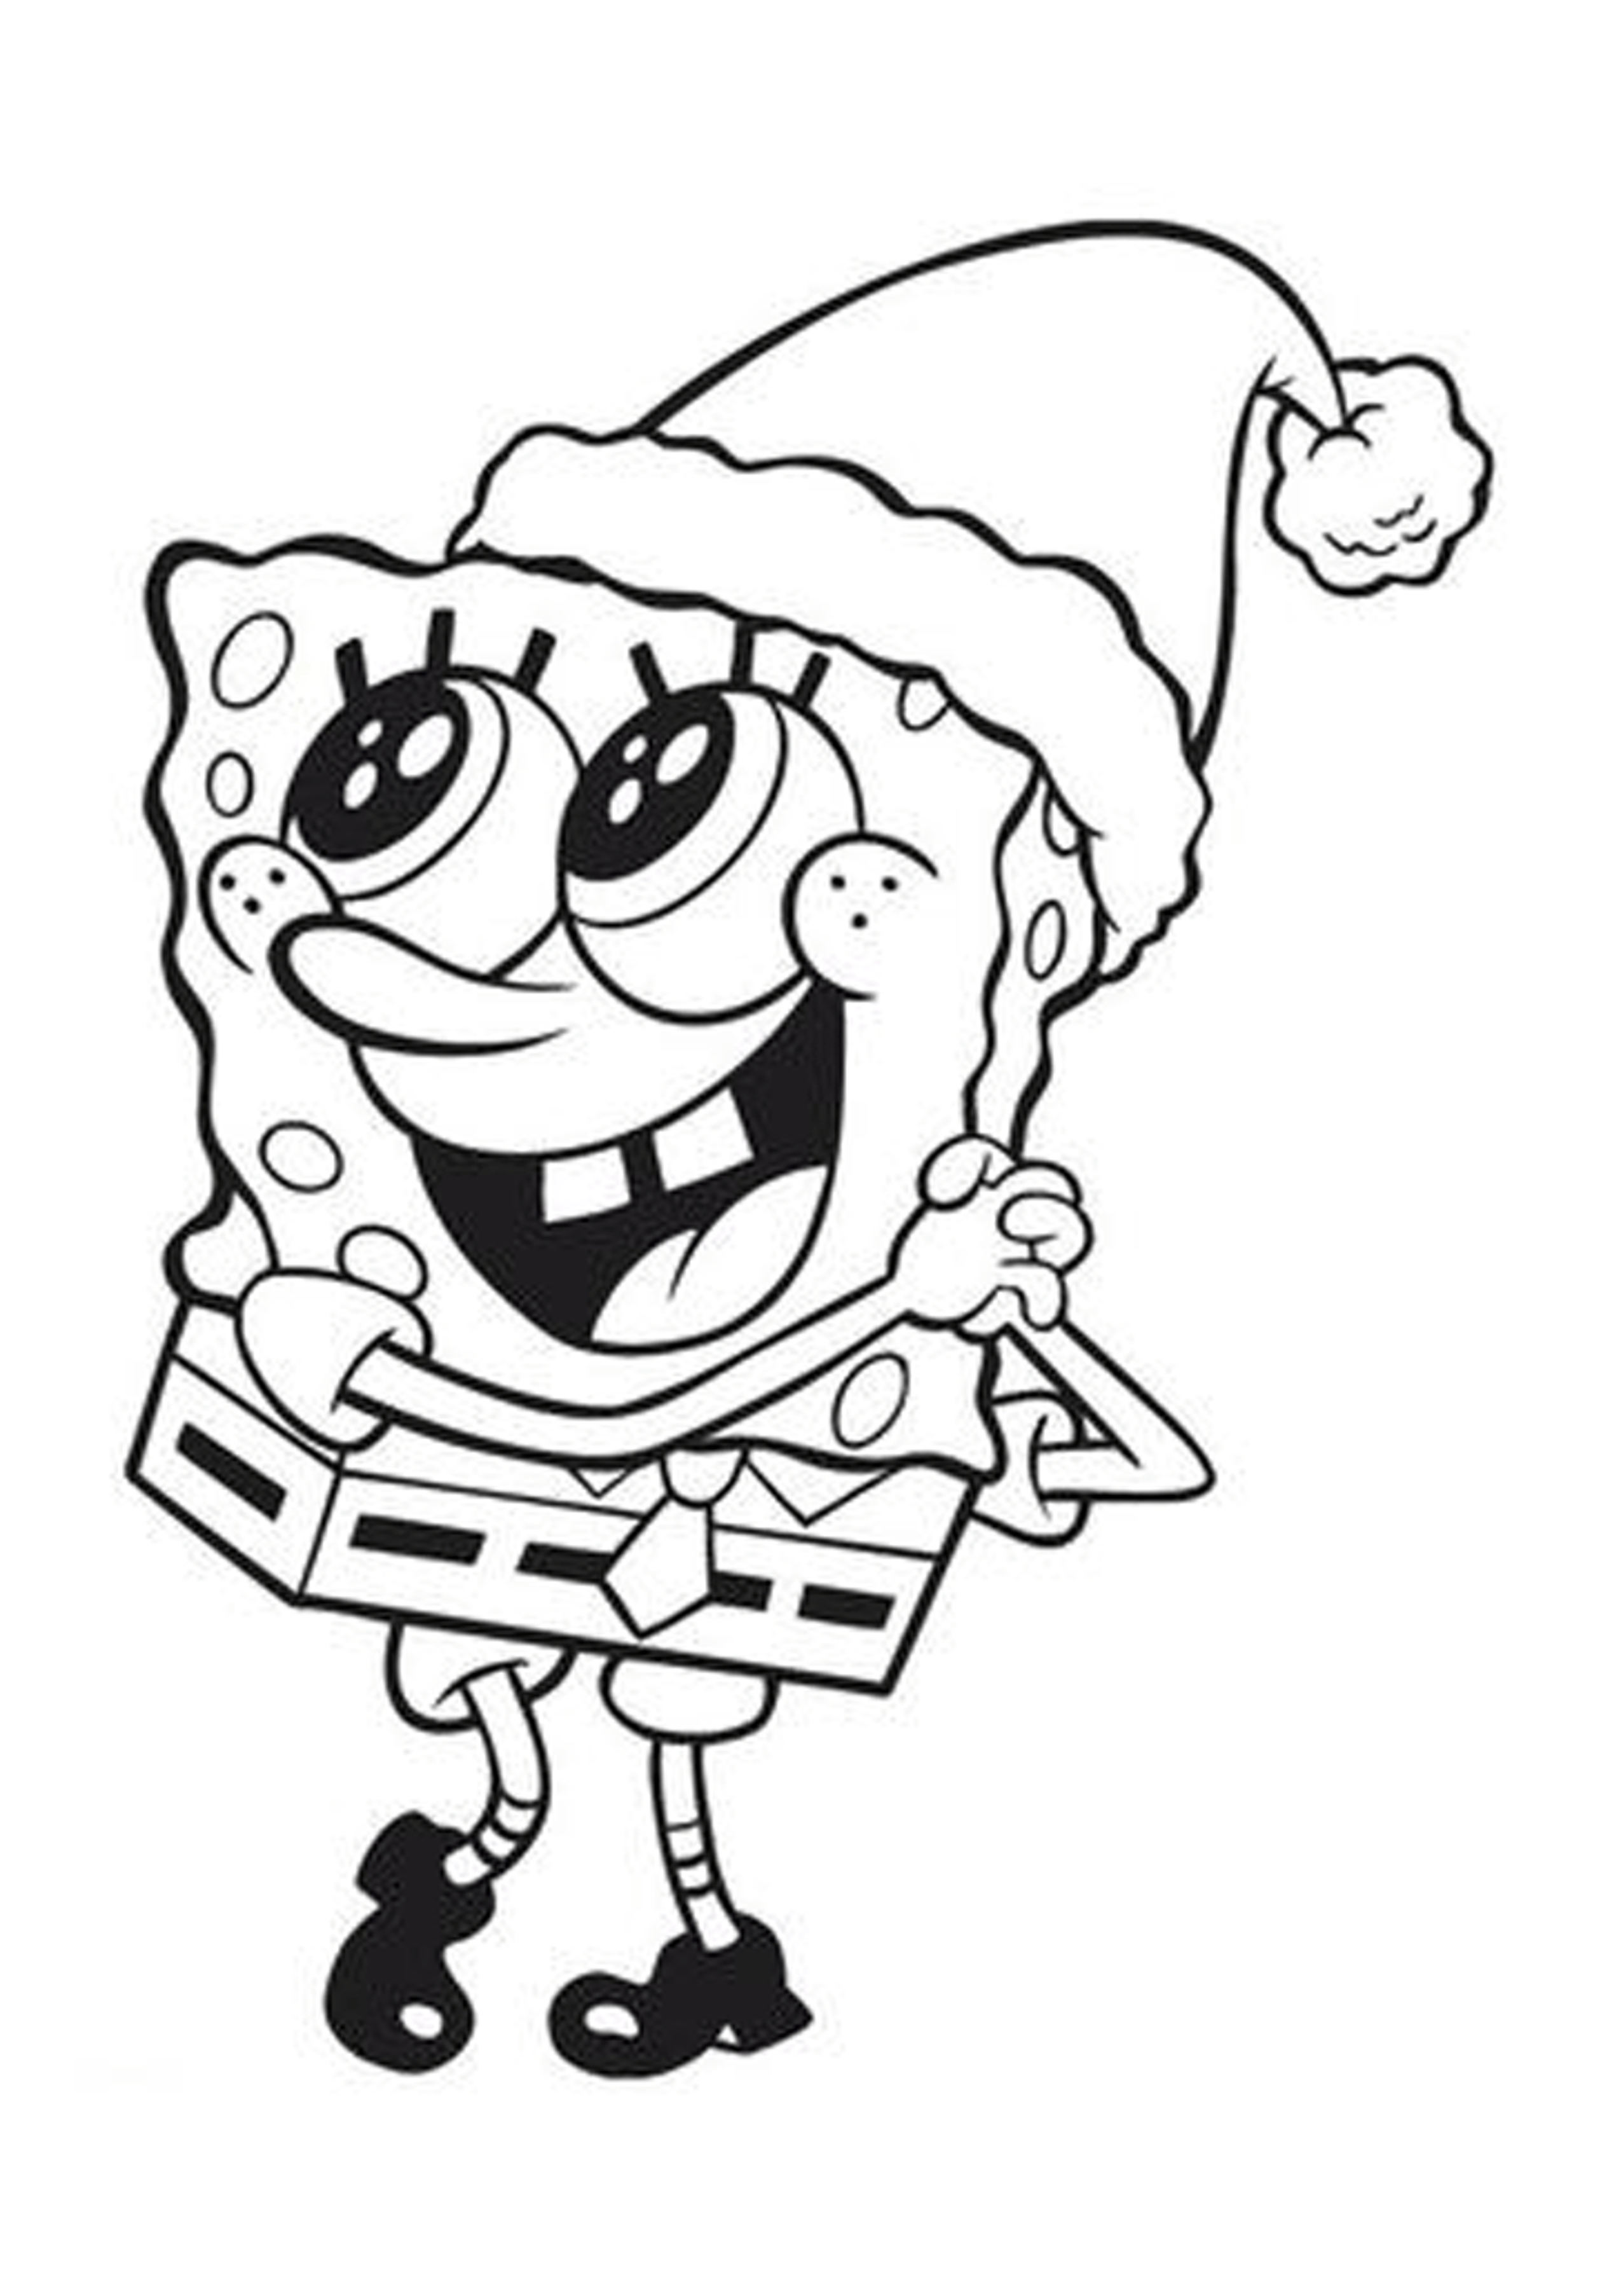 Spongebob Cartoon Coloring Pages at GetColorings.com | Free printable